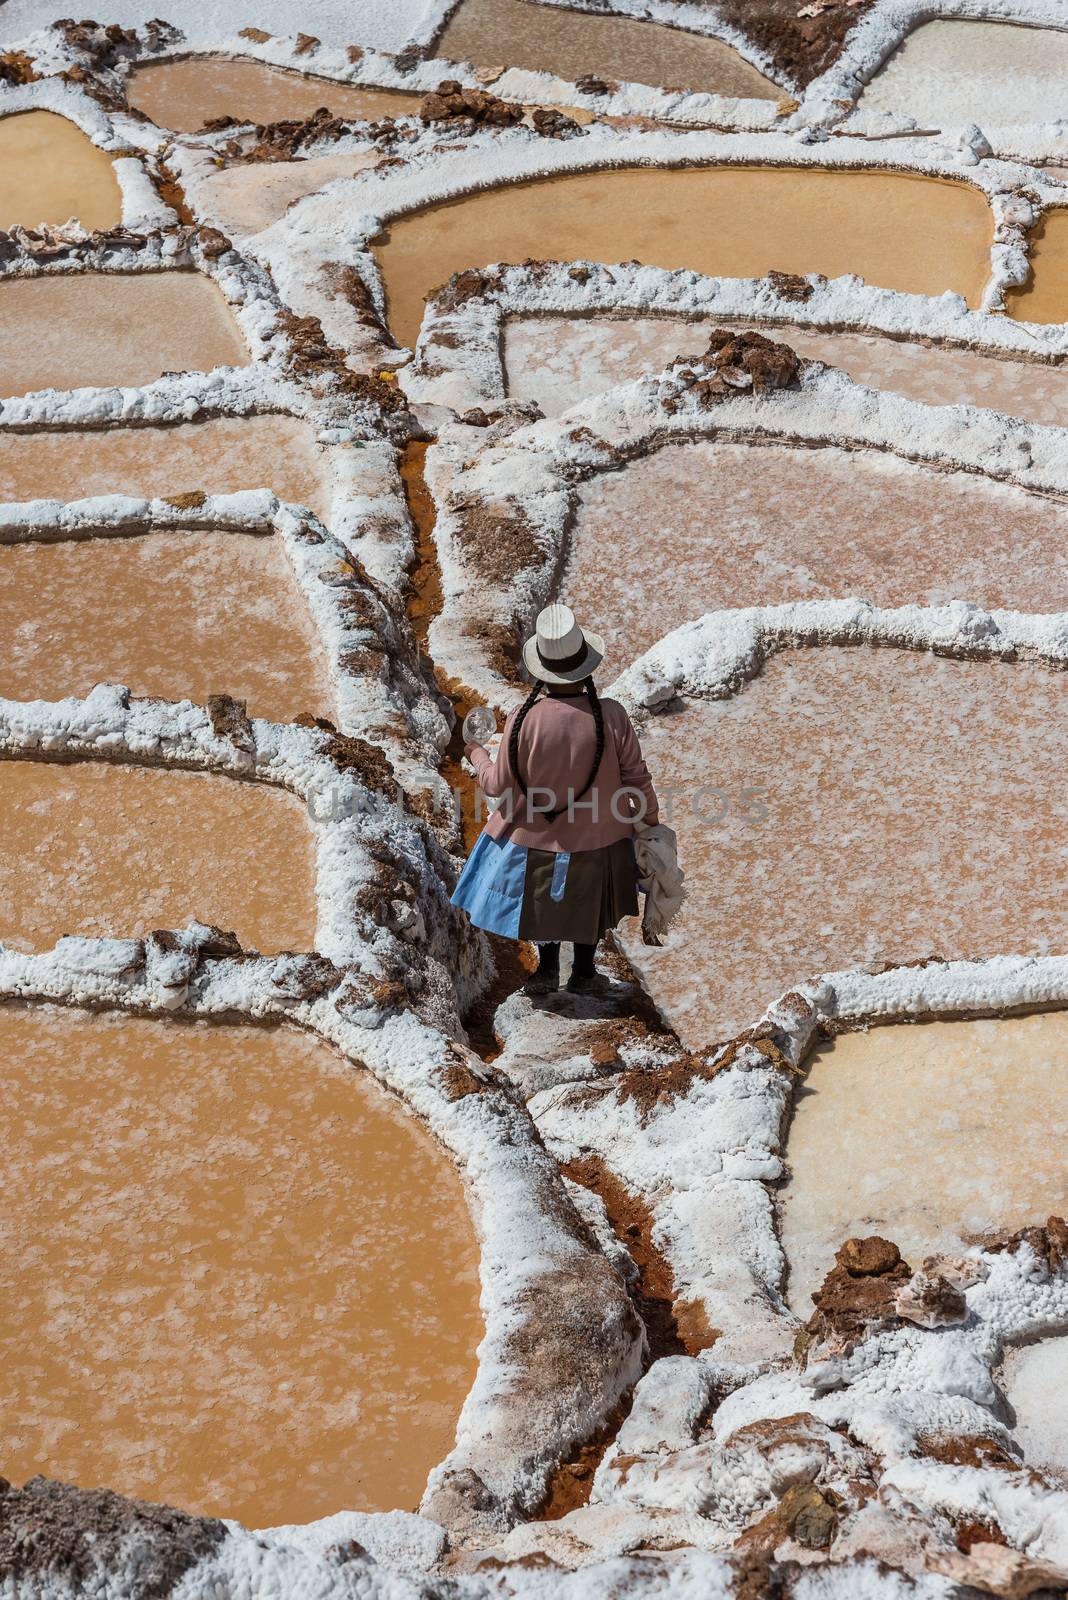 Maras, Peru - July 23, 2013: woman at Maras salt mines in the peruvian Andes at Cuzco Peru on july 23, 2013